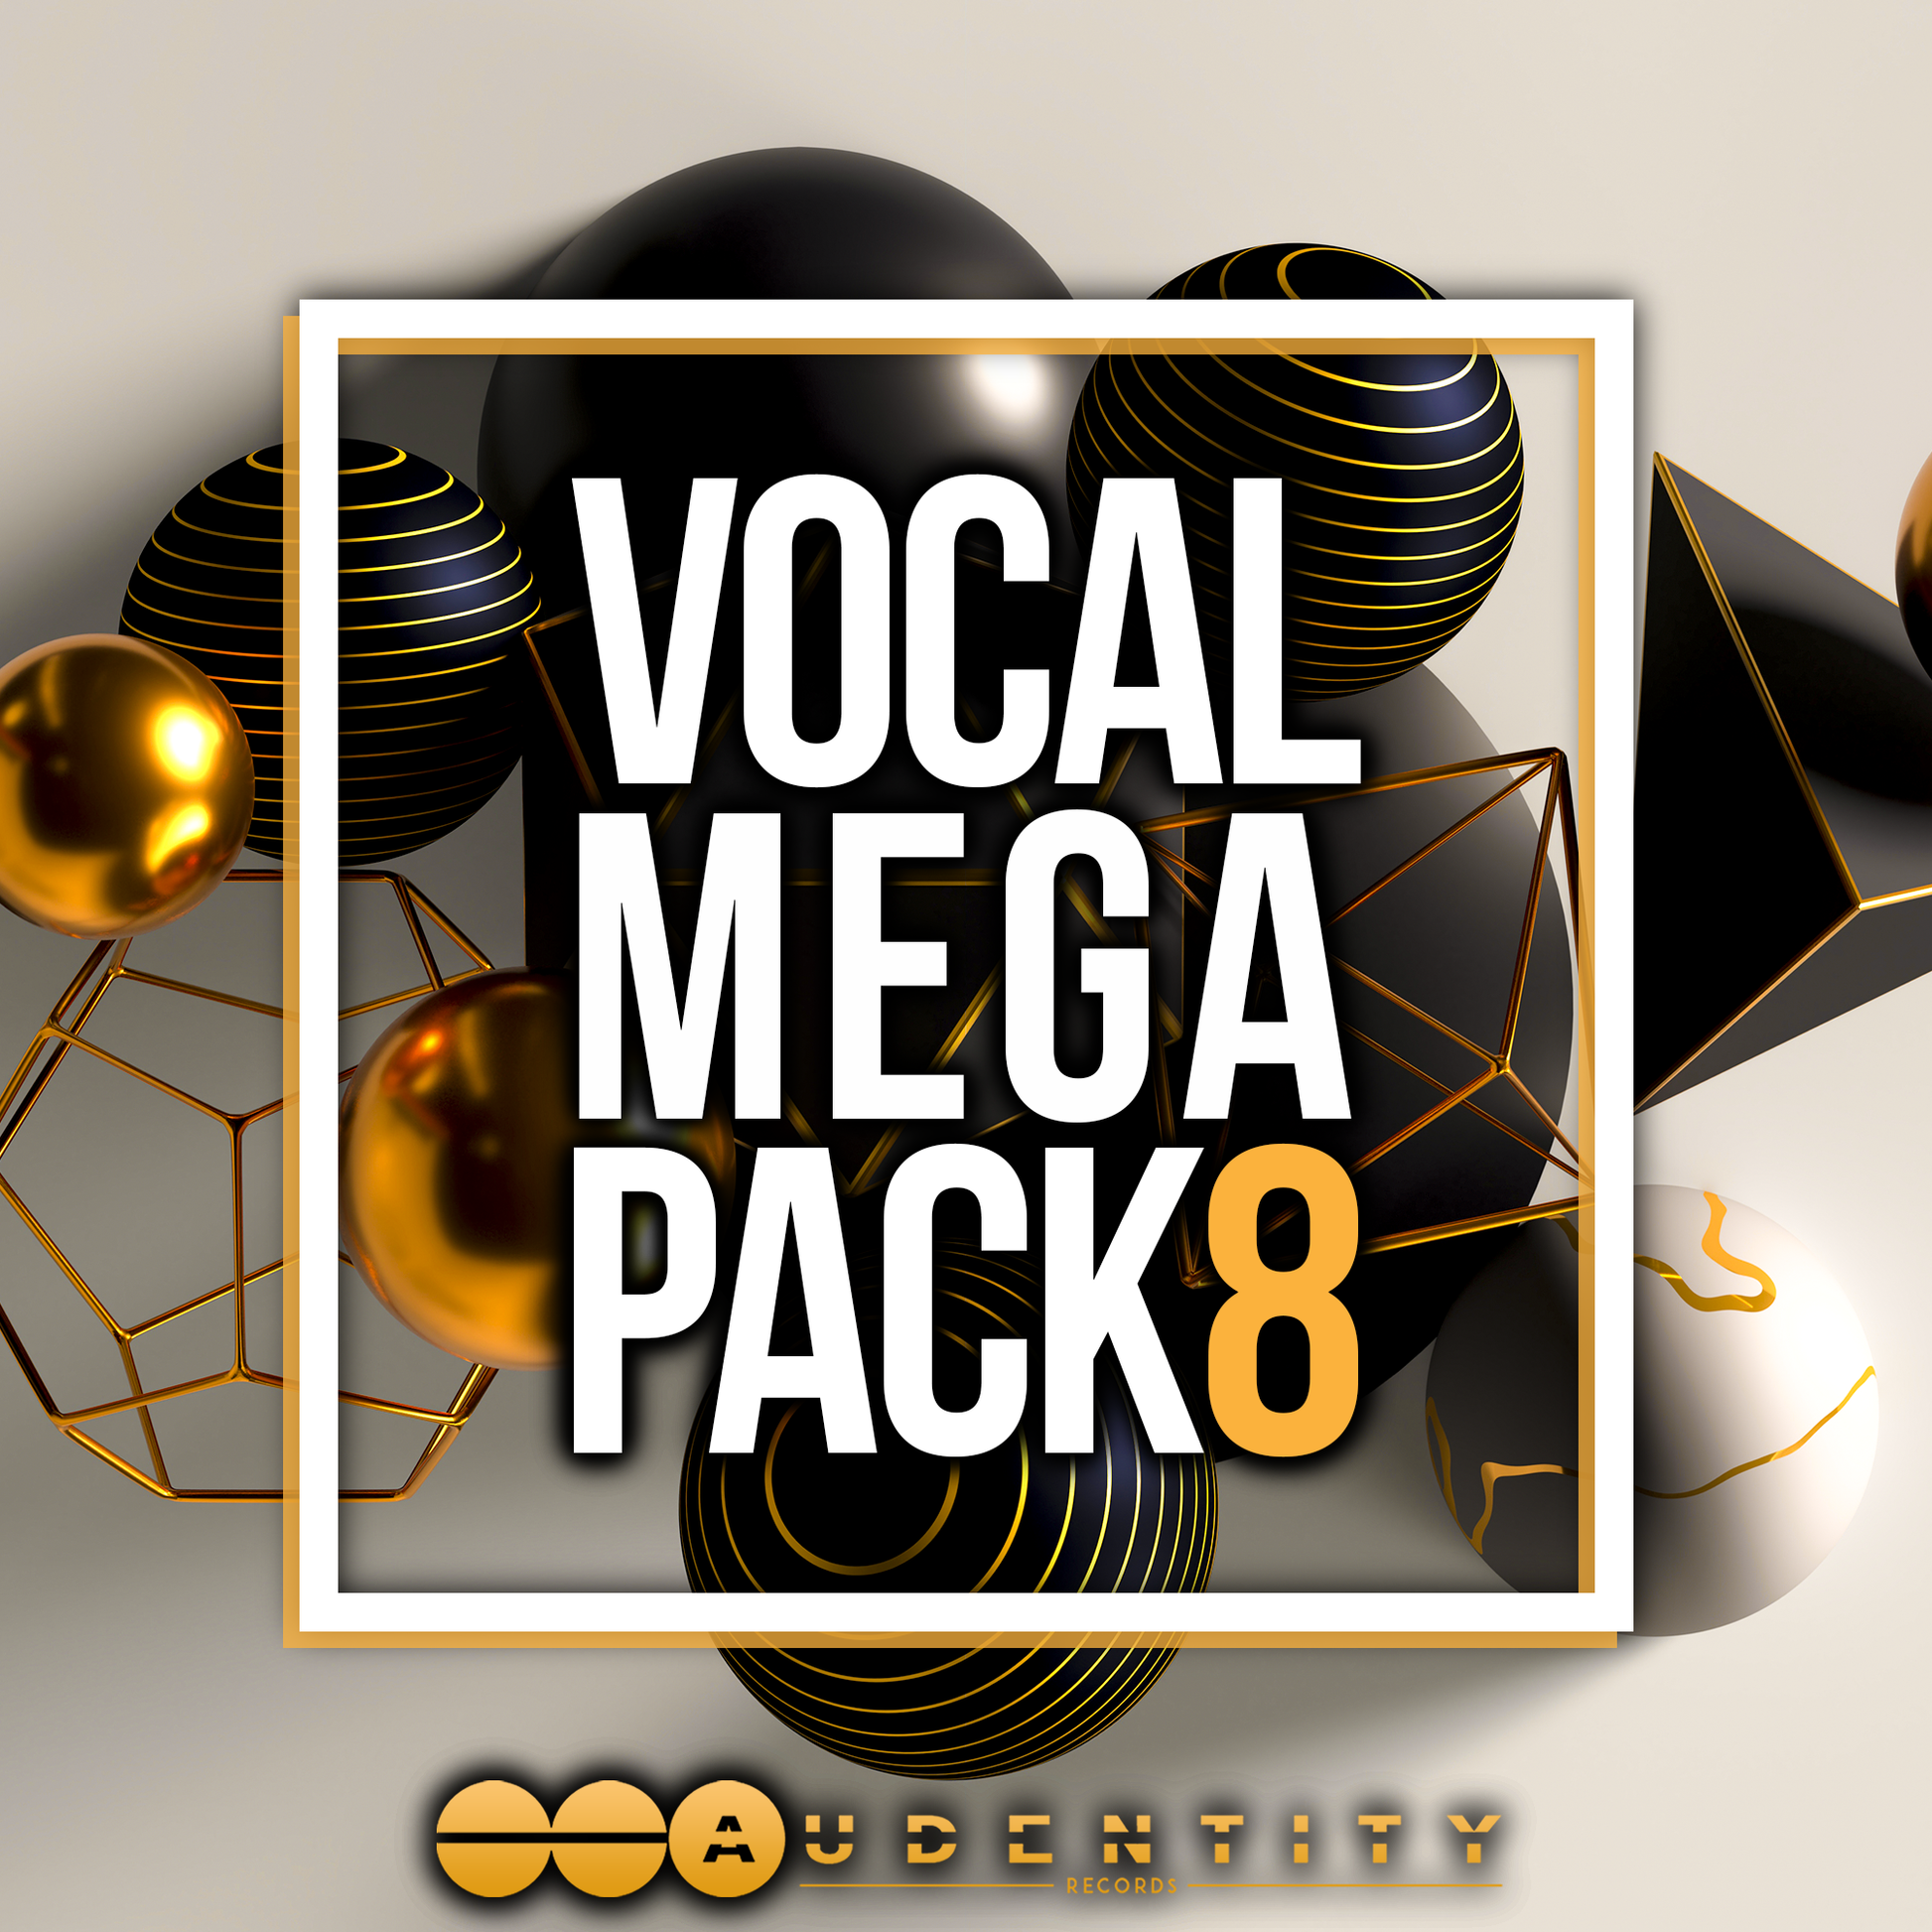 Vocal Megapack 8 - vocal sample pack contains vocal samples